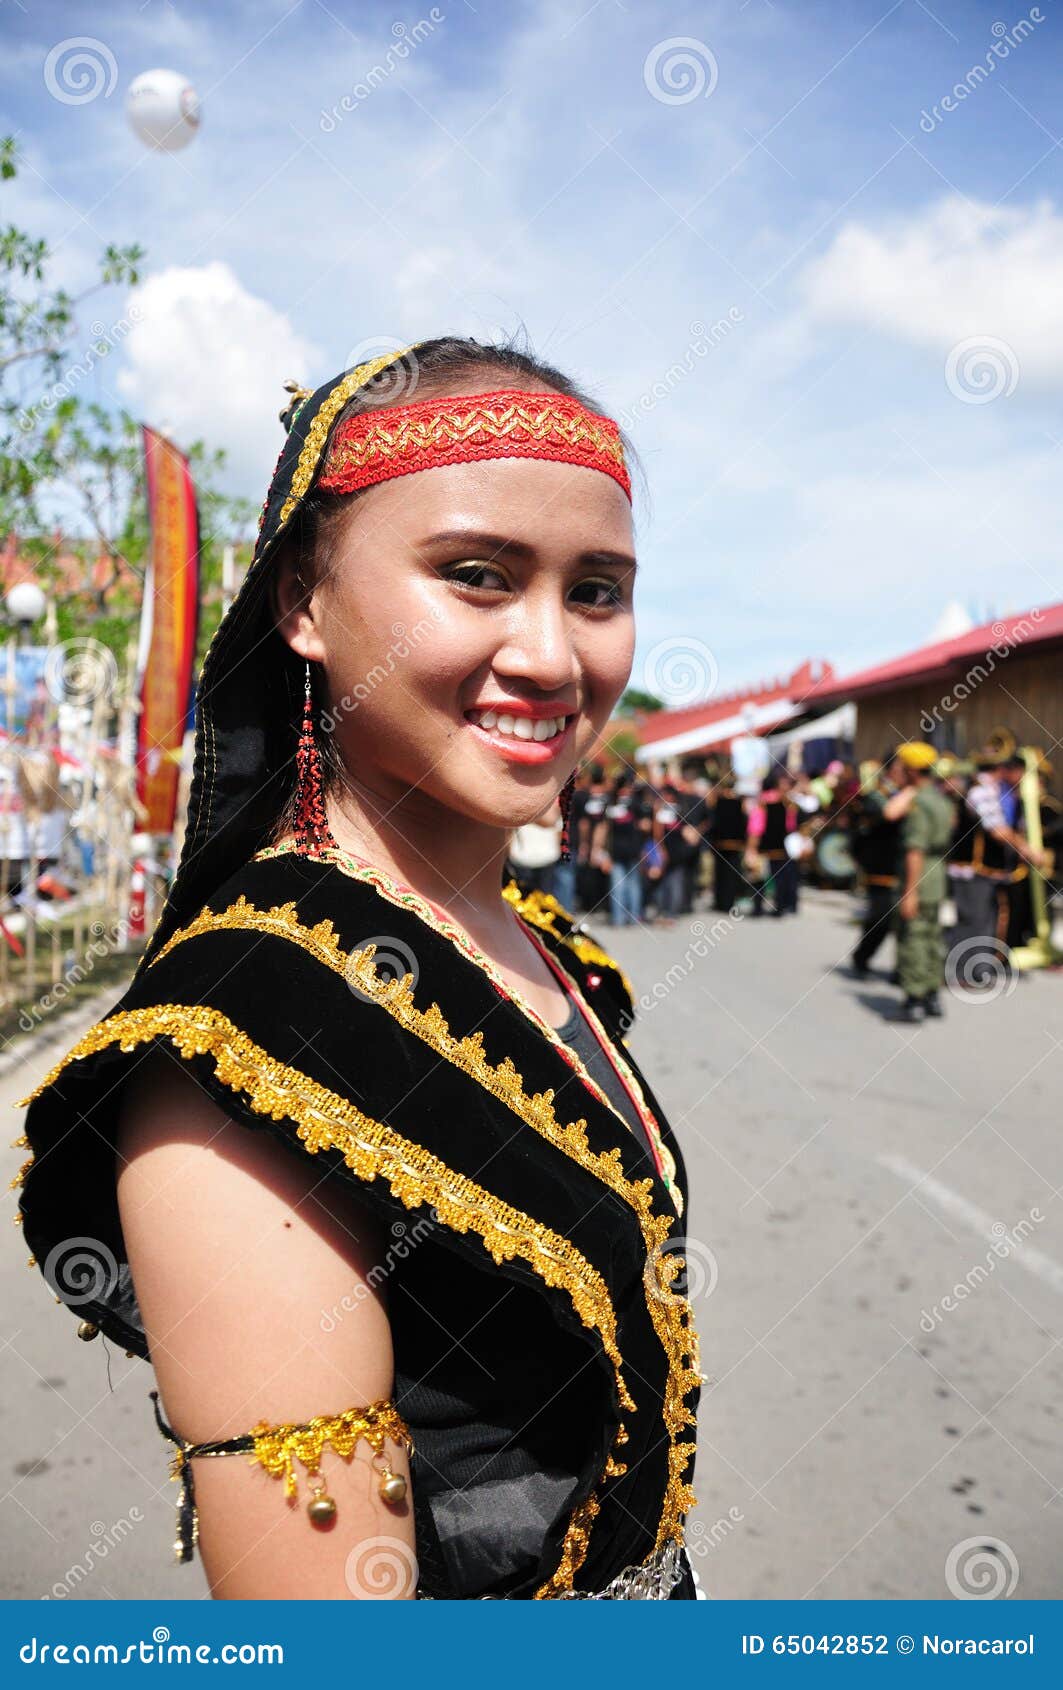 Lovely Girl Of Kadazan Dusun Native In Traditional